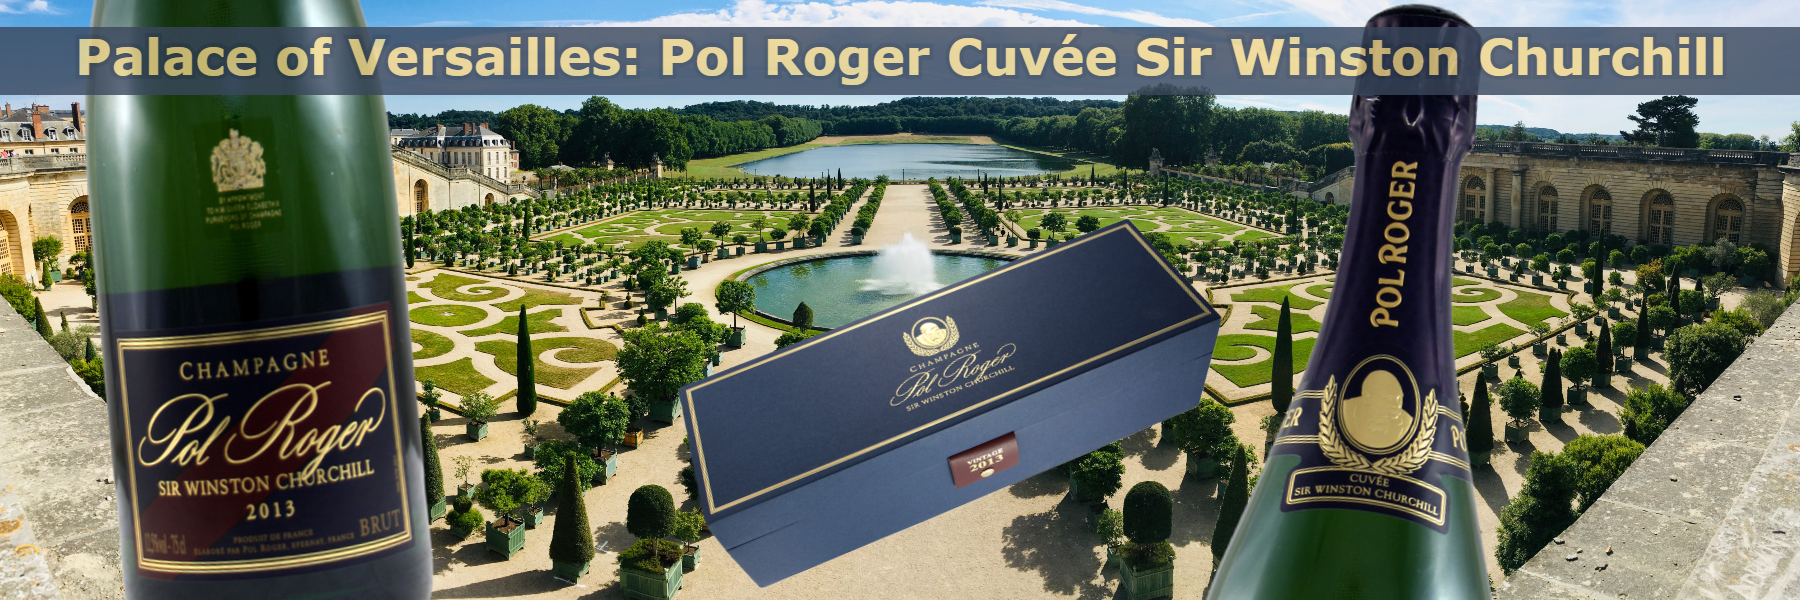 Palace of Versailles: Pol Roger Cuvée Sir Winston Churchill